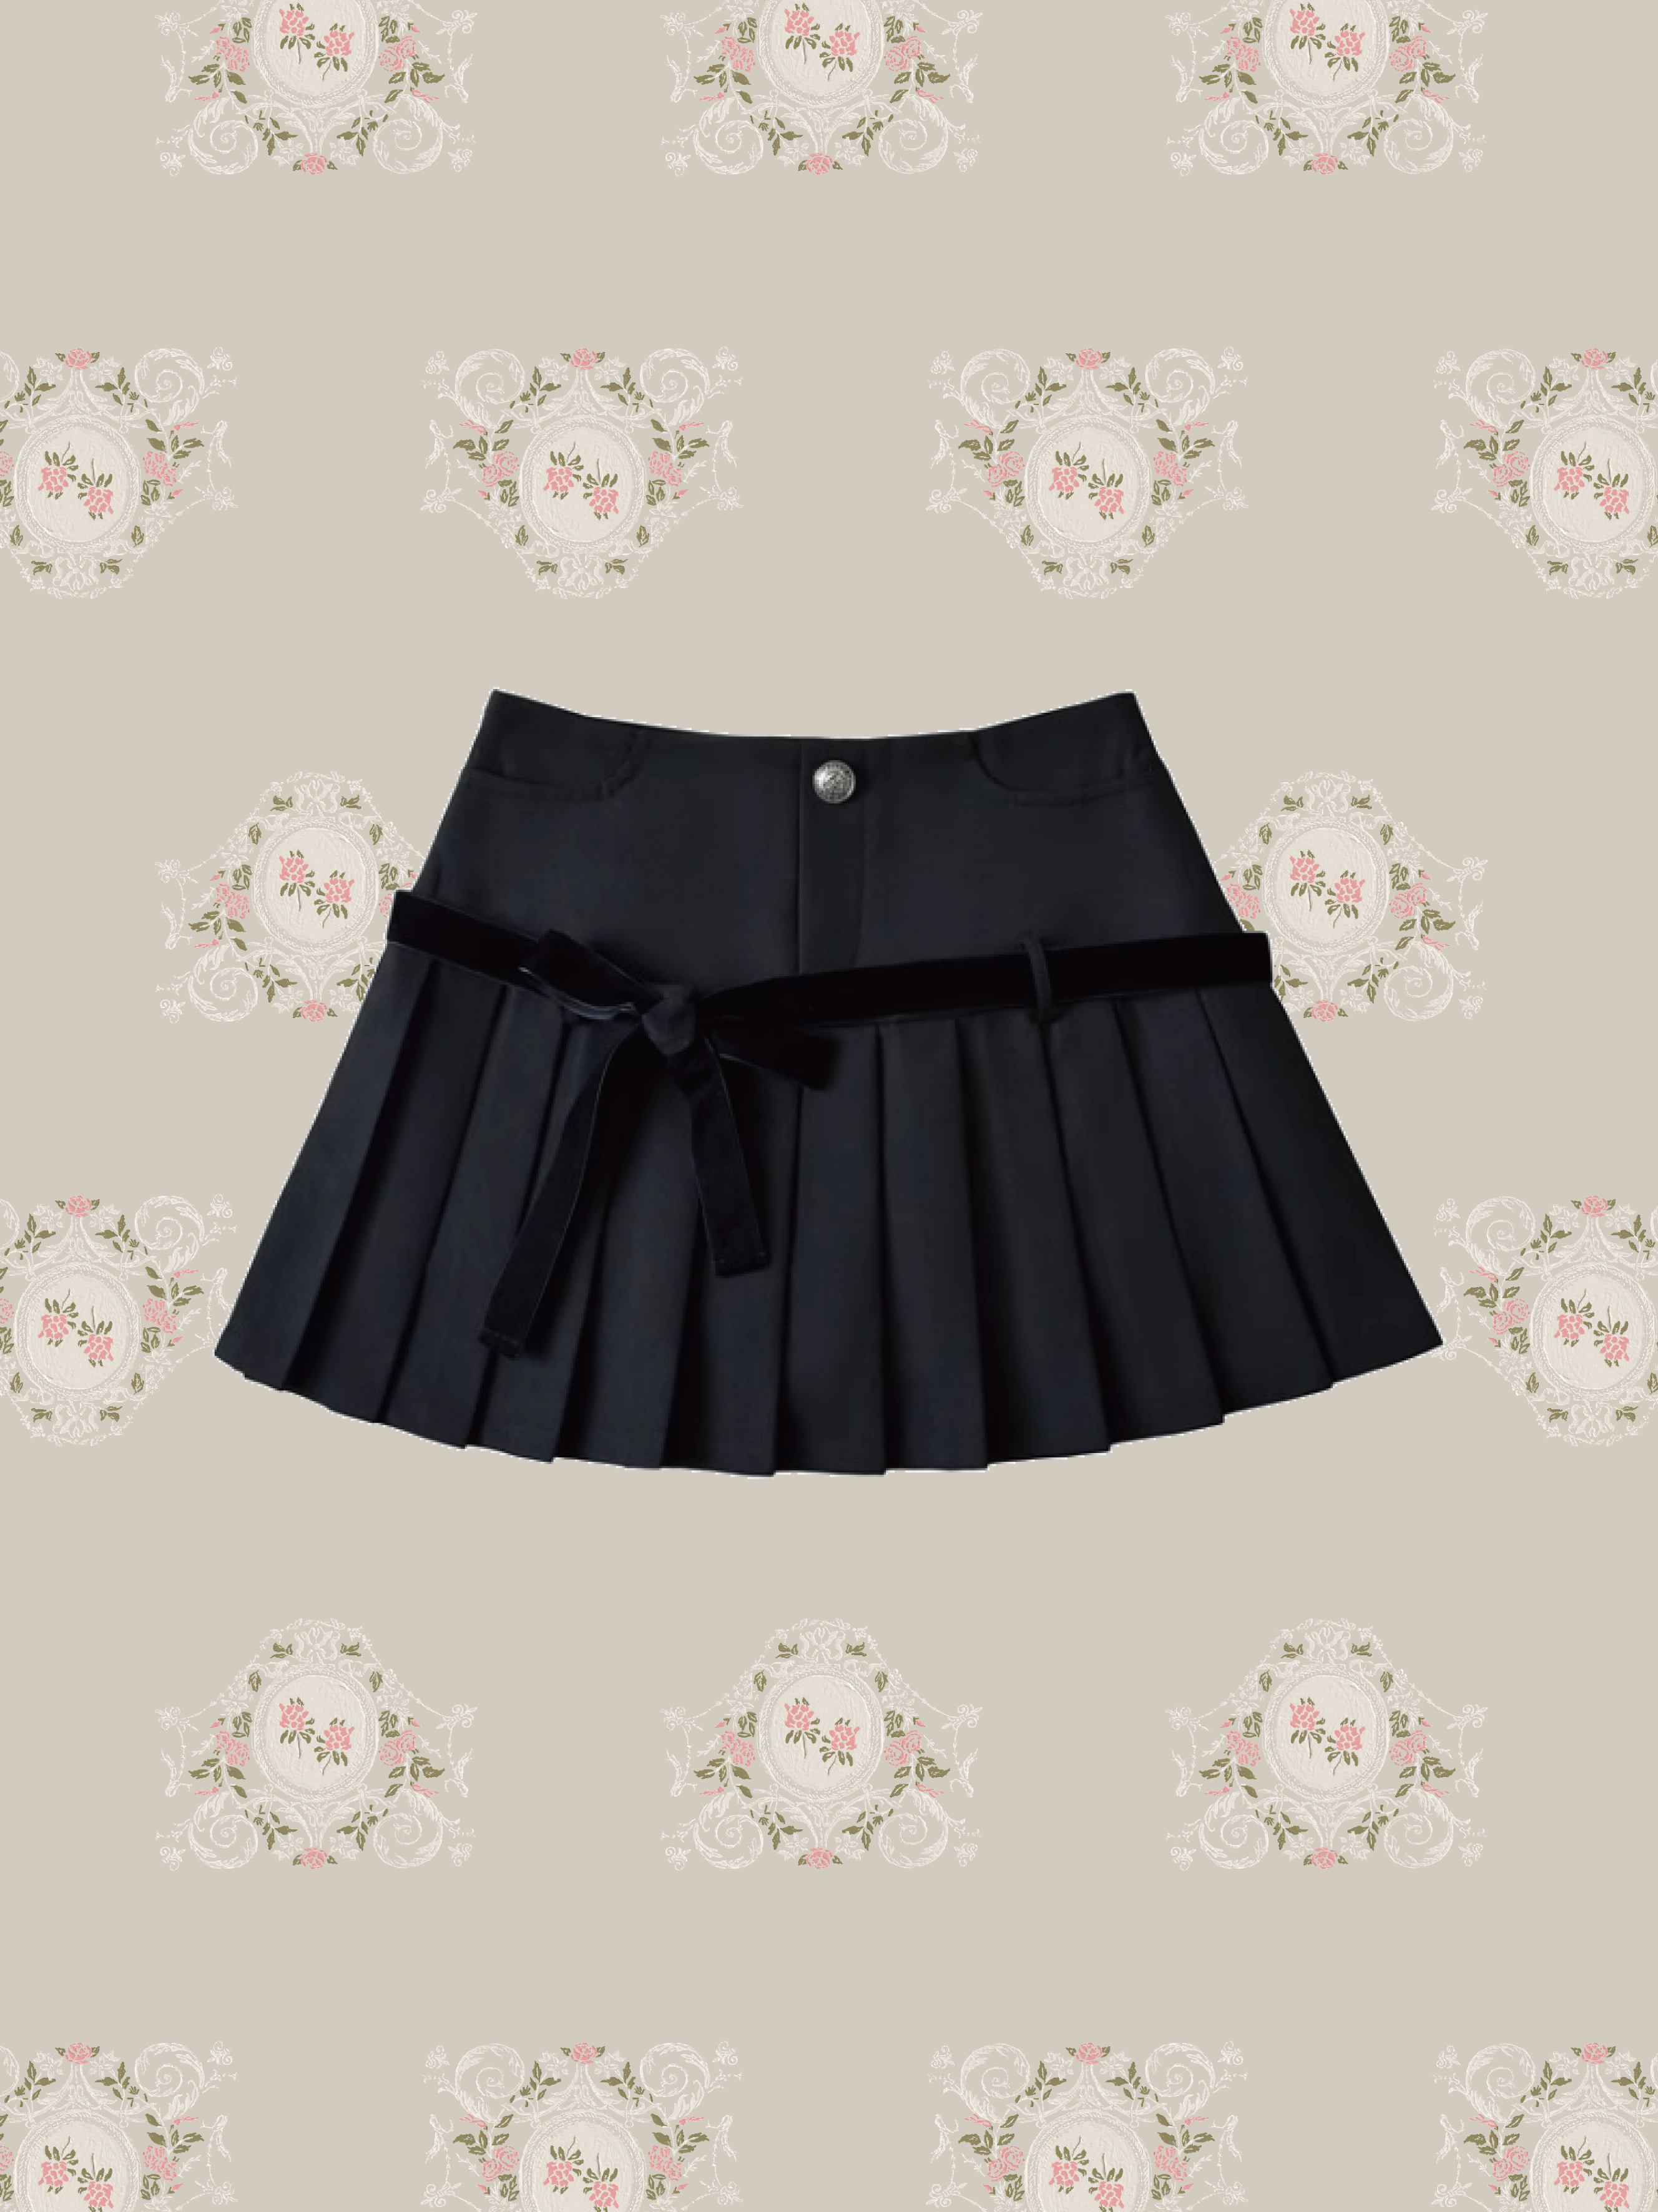 Preppy Style Plaid Mini Skirt/プレッピースタイルチェック柄ミニスカート